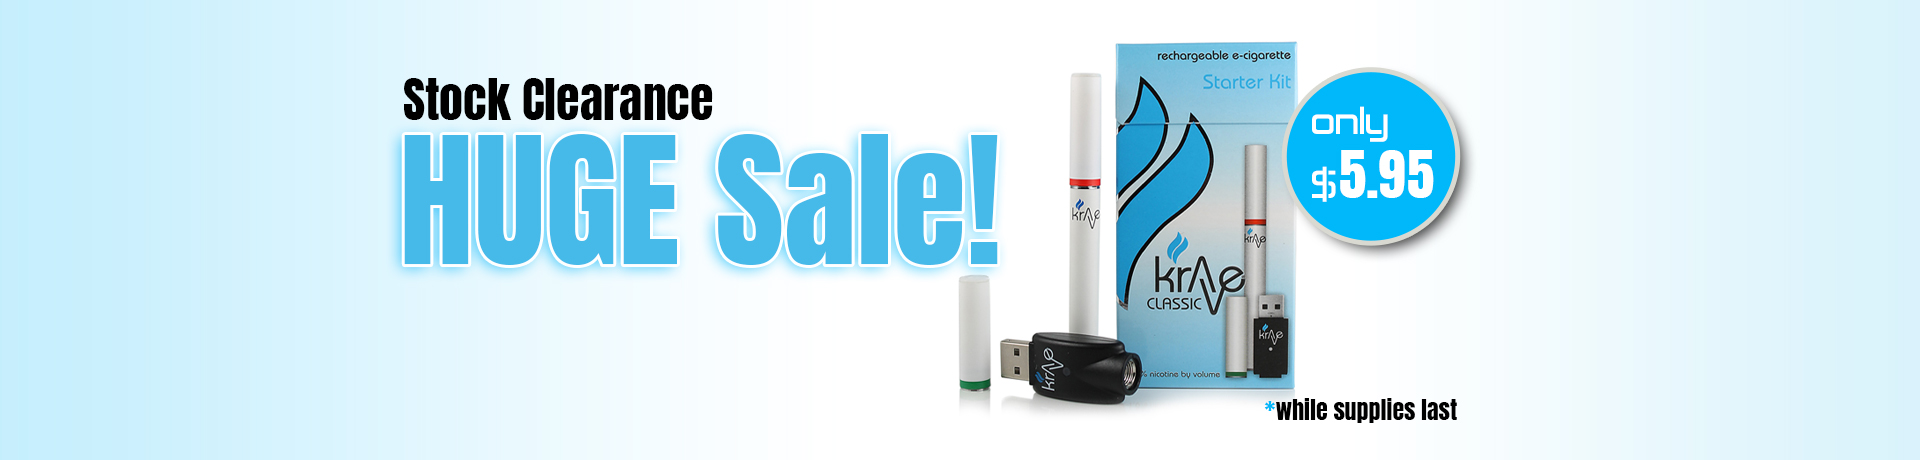 Krave Electronic Cigarettes Online Store